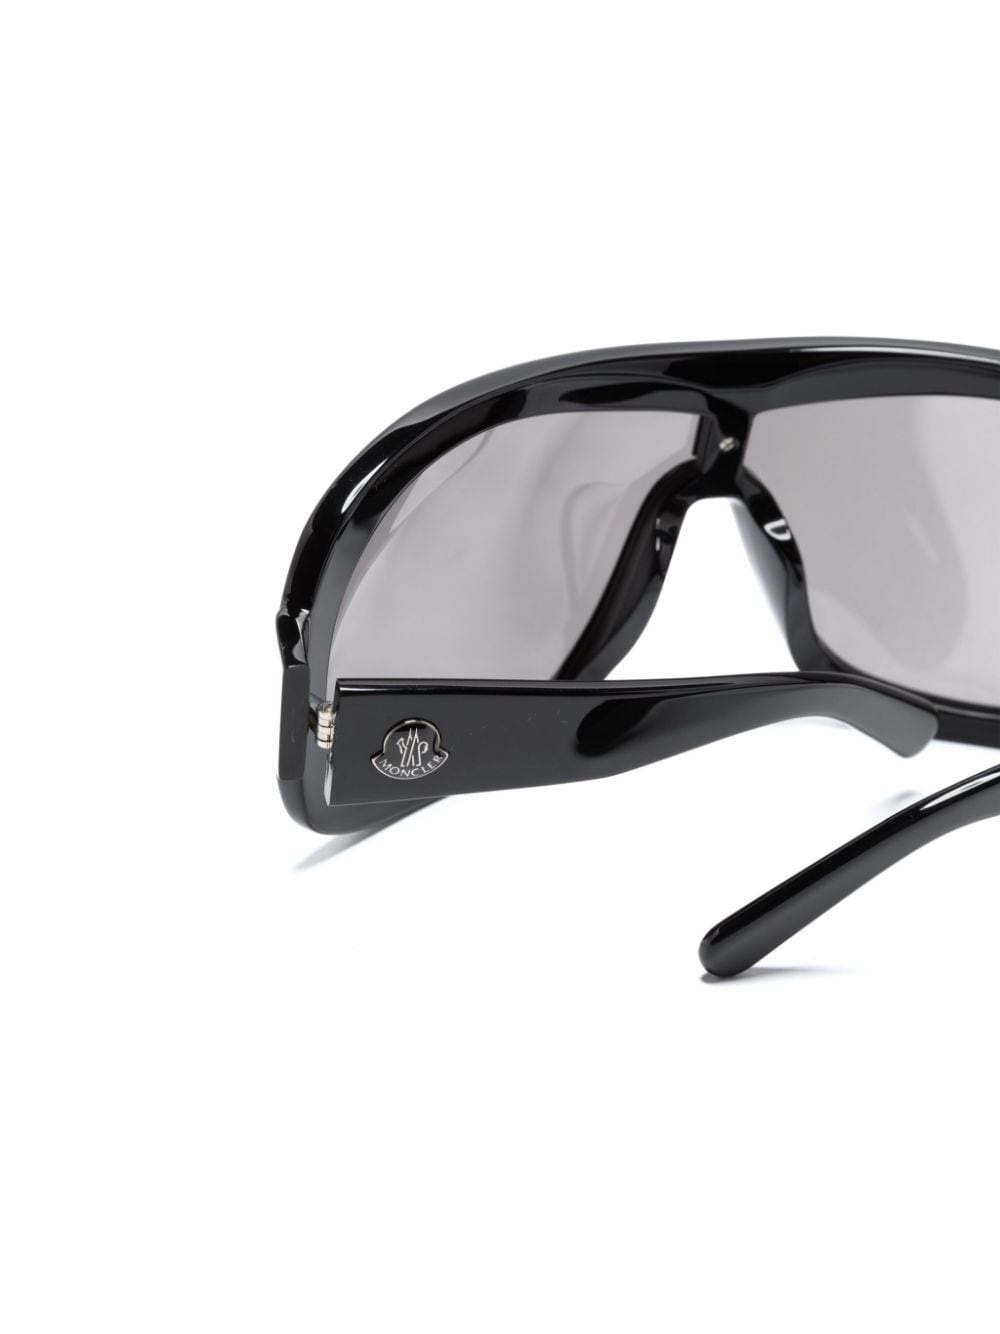 Franconia mask-frame sunglasses - 3